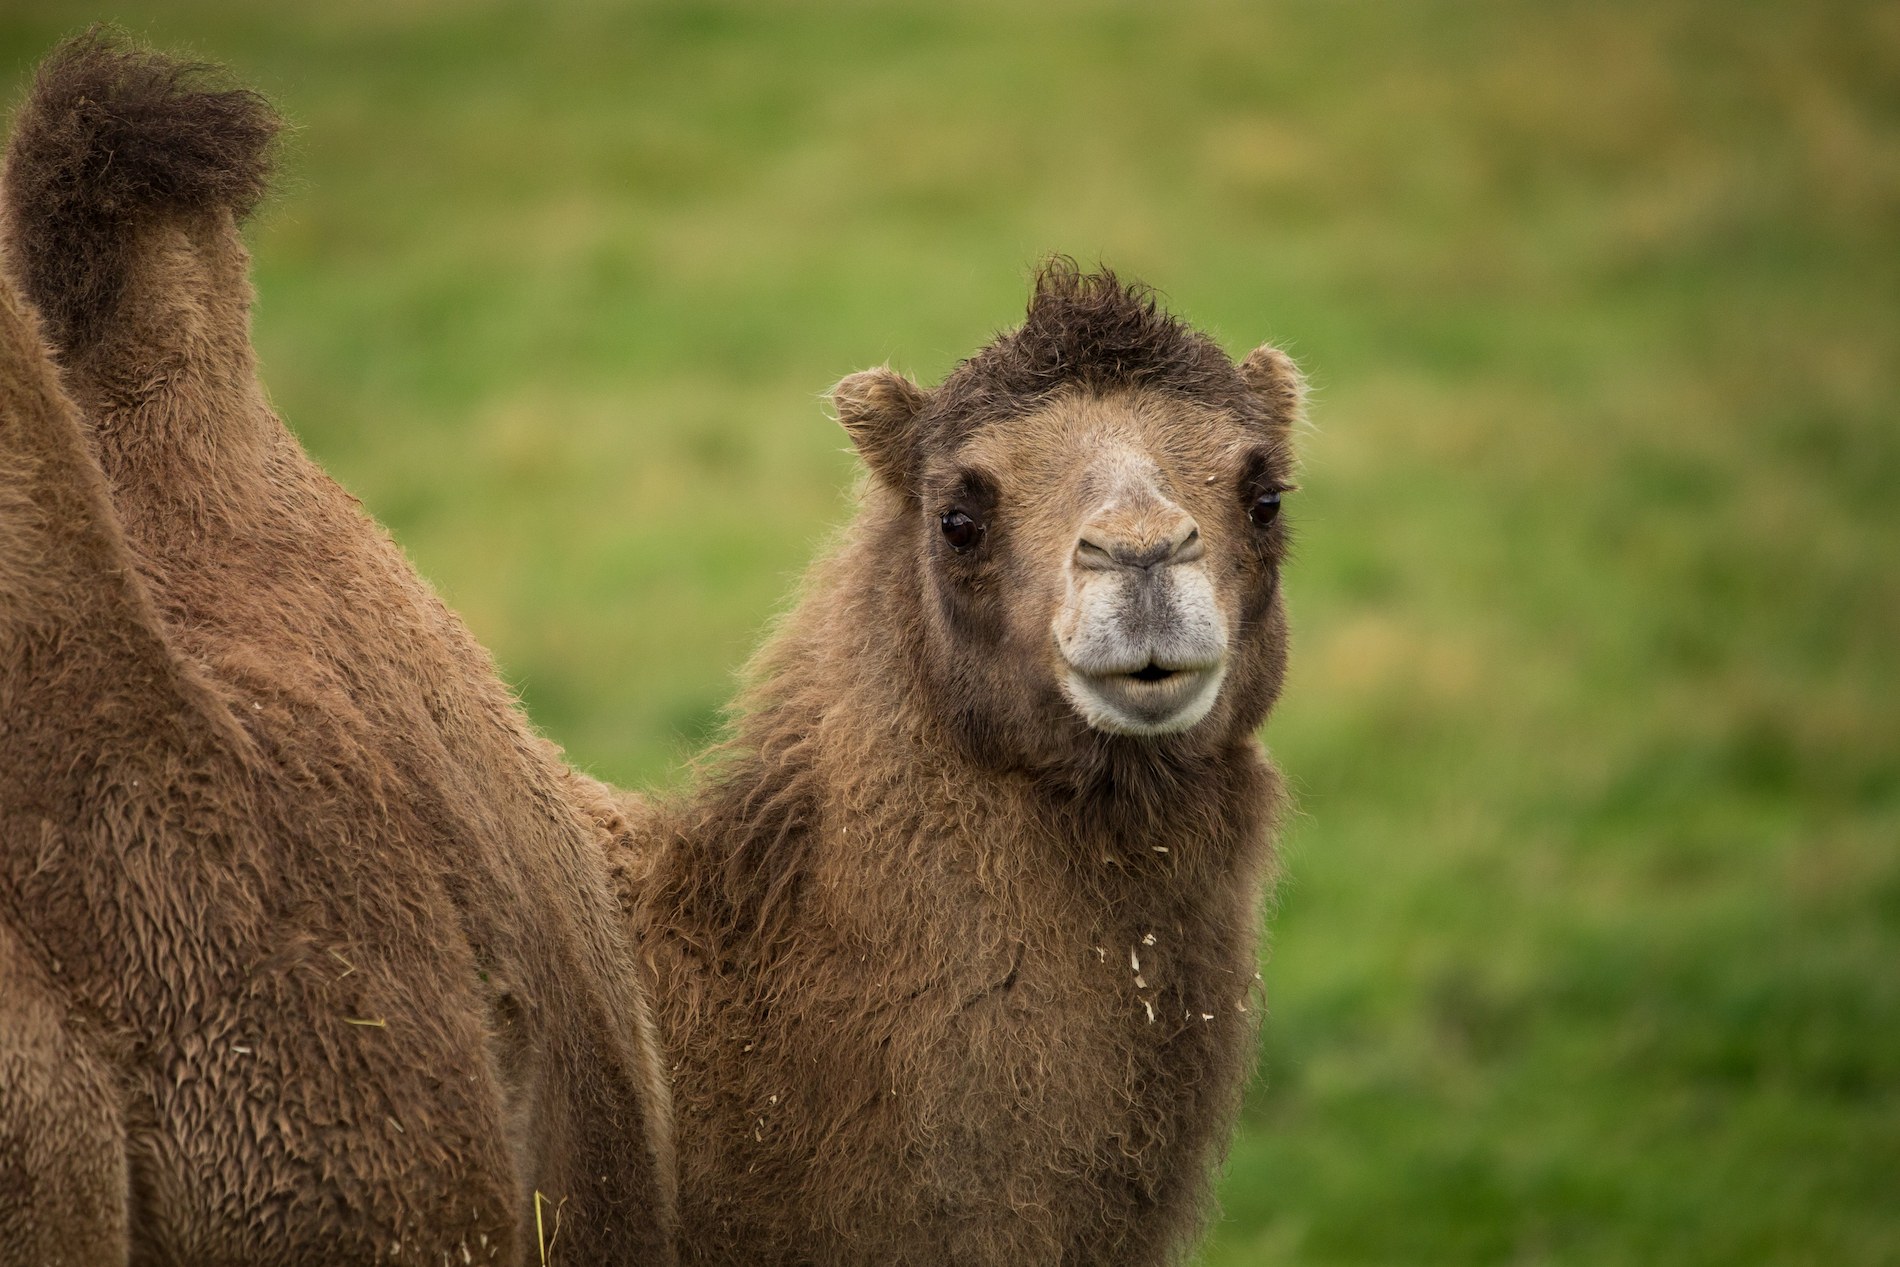 Bactrian camel eye contact entrance reserve

Image: 2021